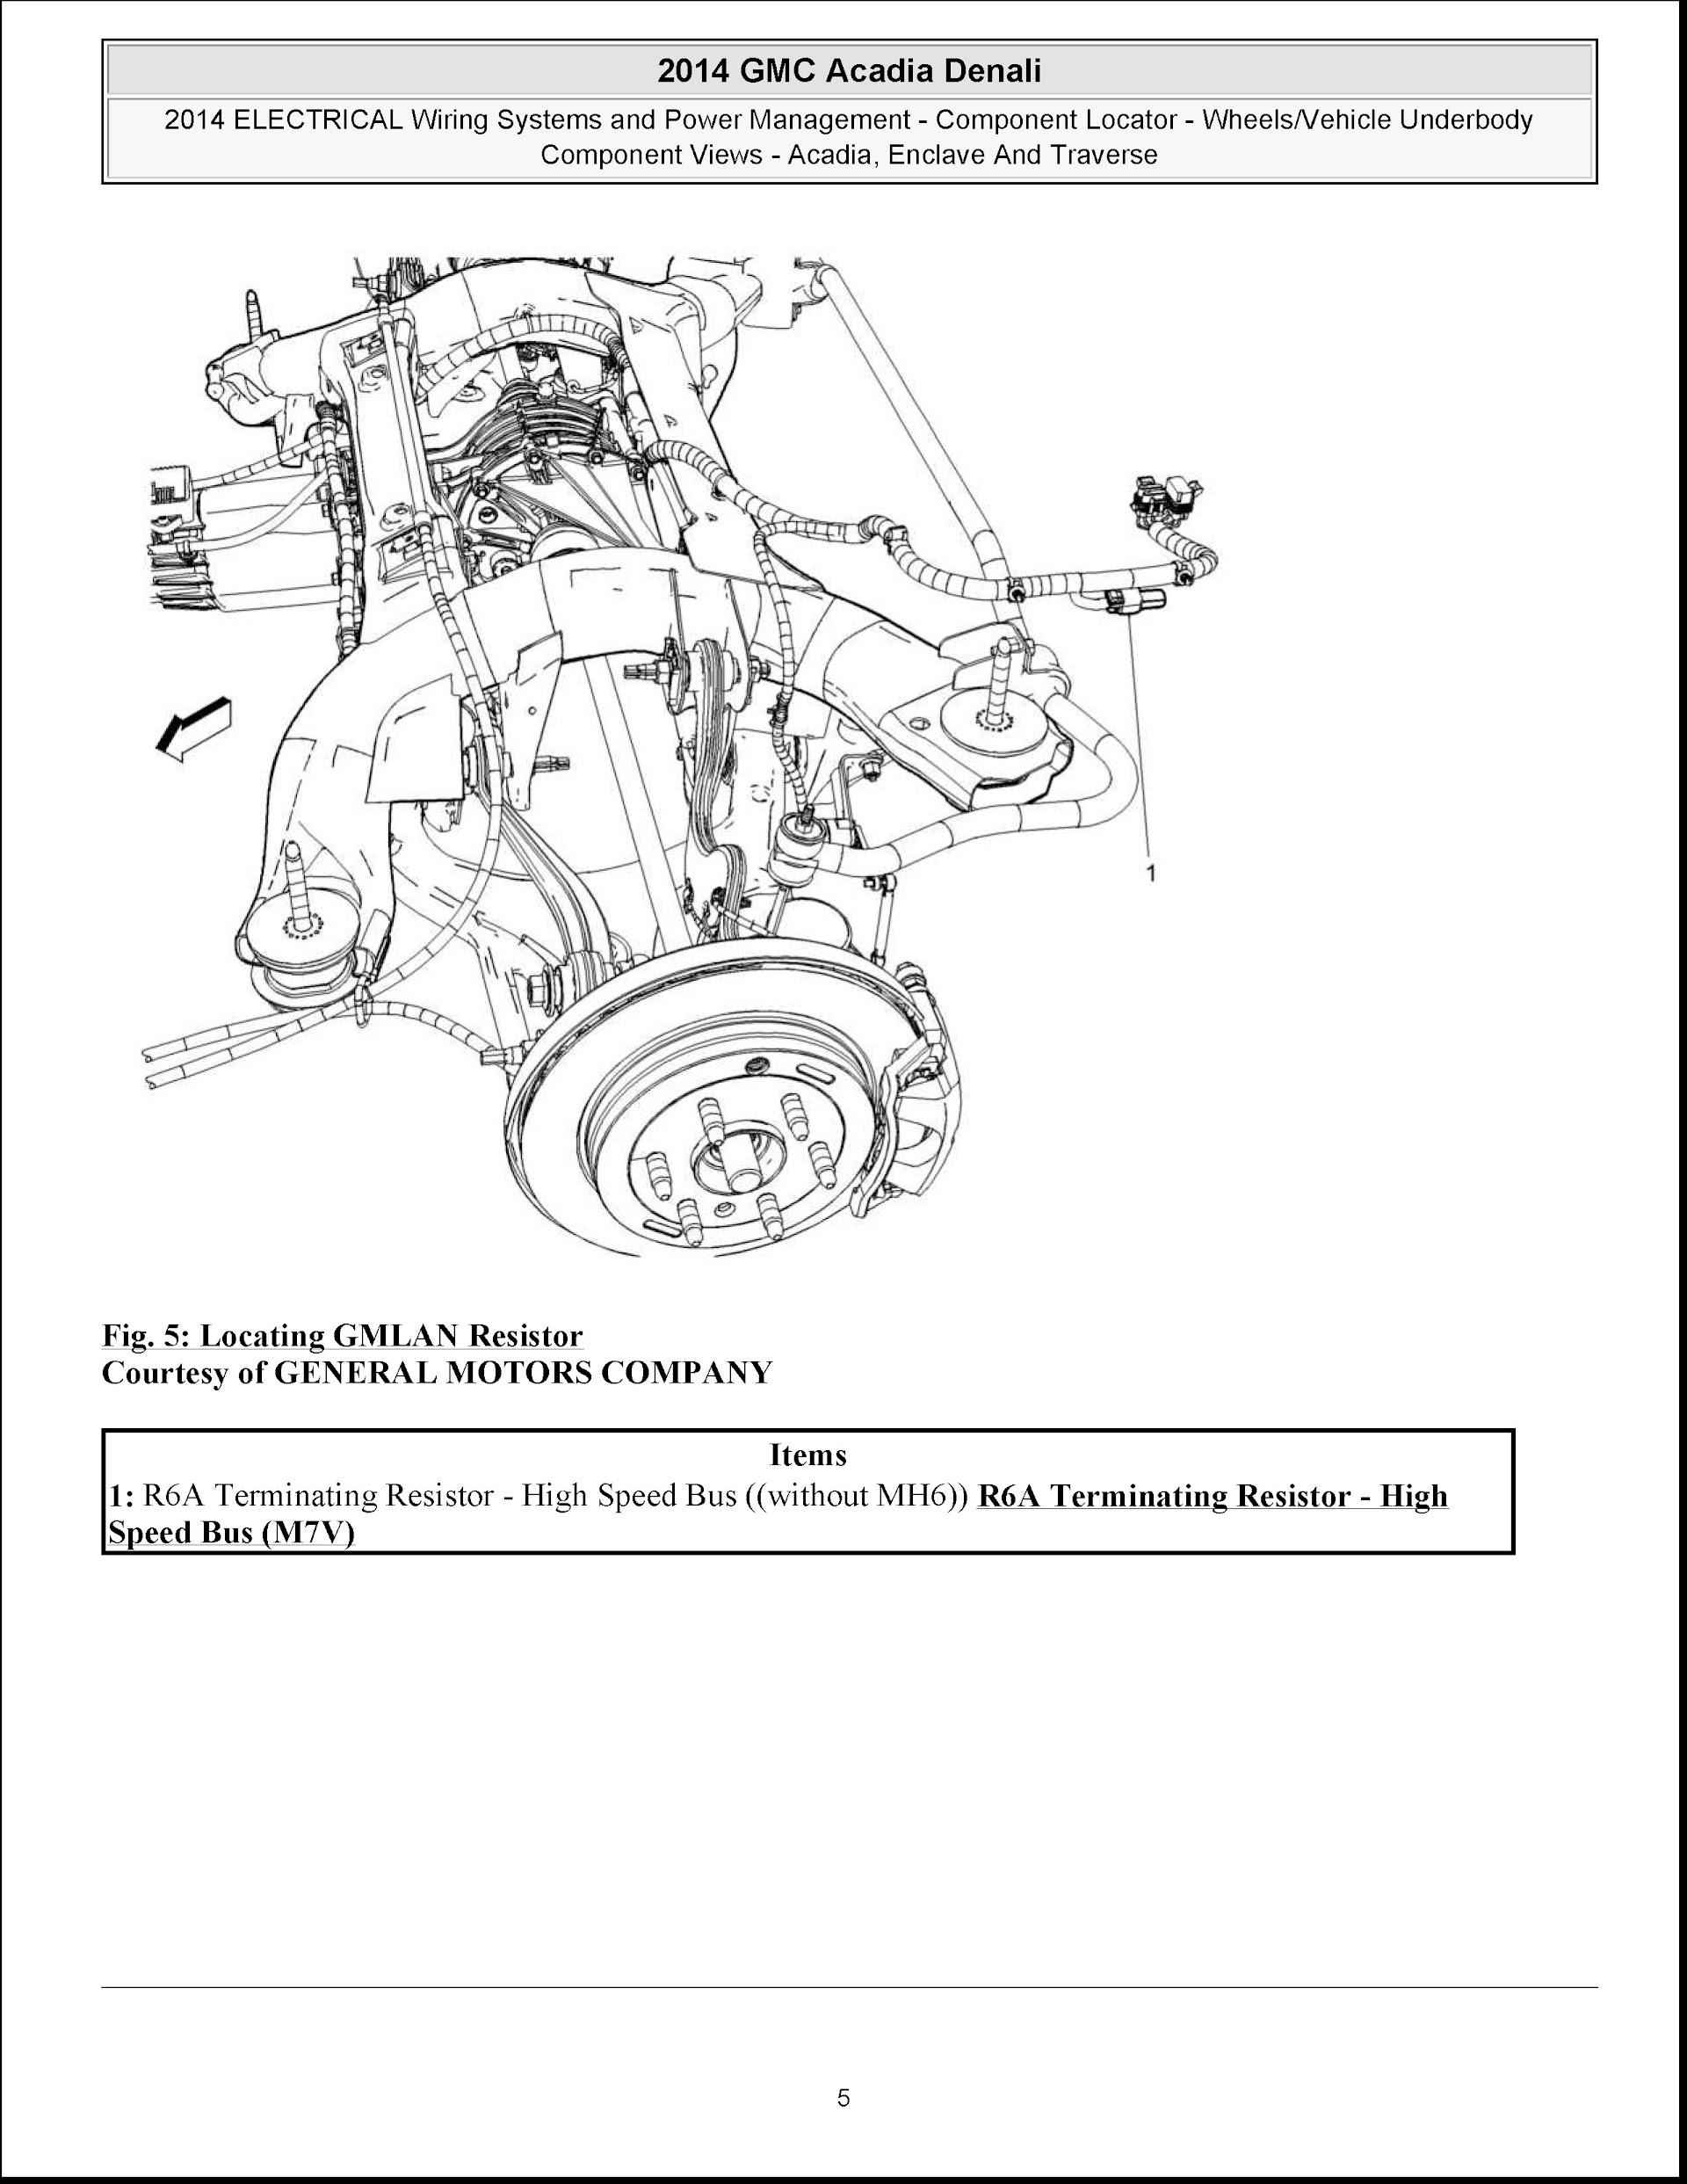 2013-2016 GMC Acadia Repair Manual (Denali, Enclave and Chevrolet Traverse), system wiring